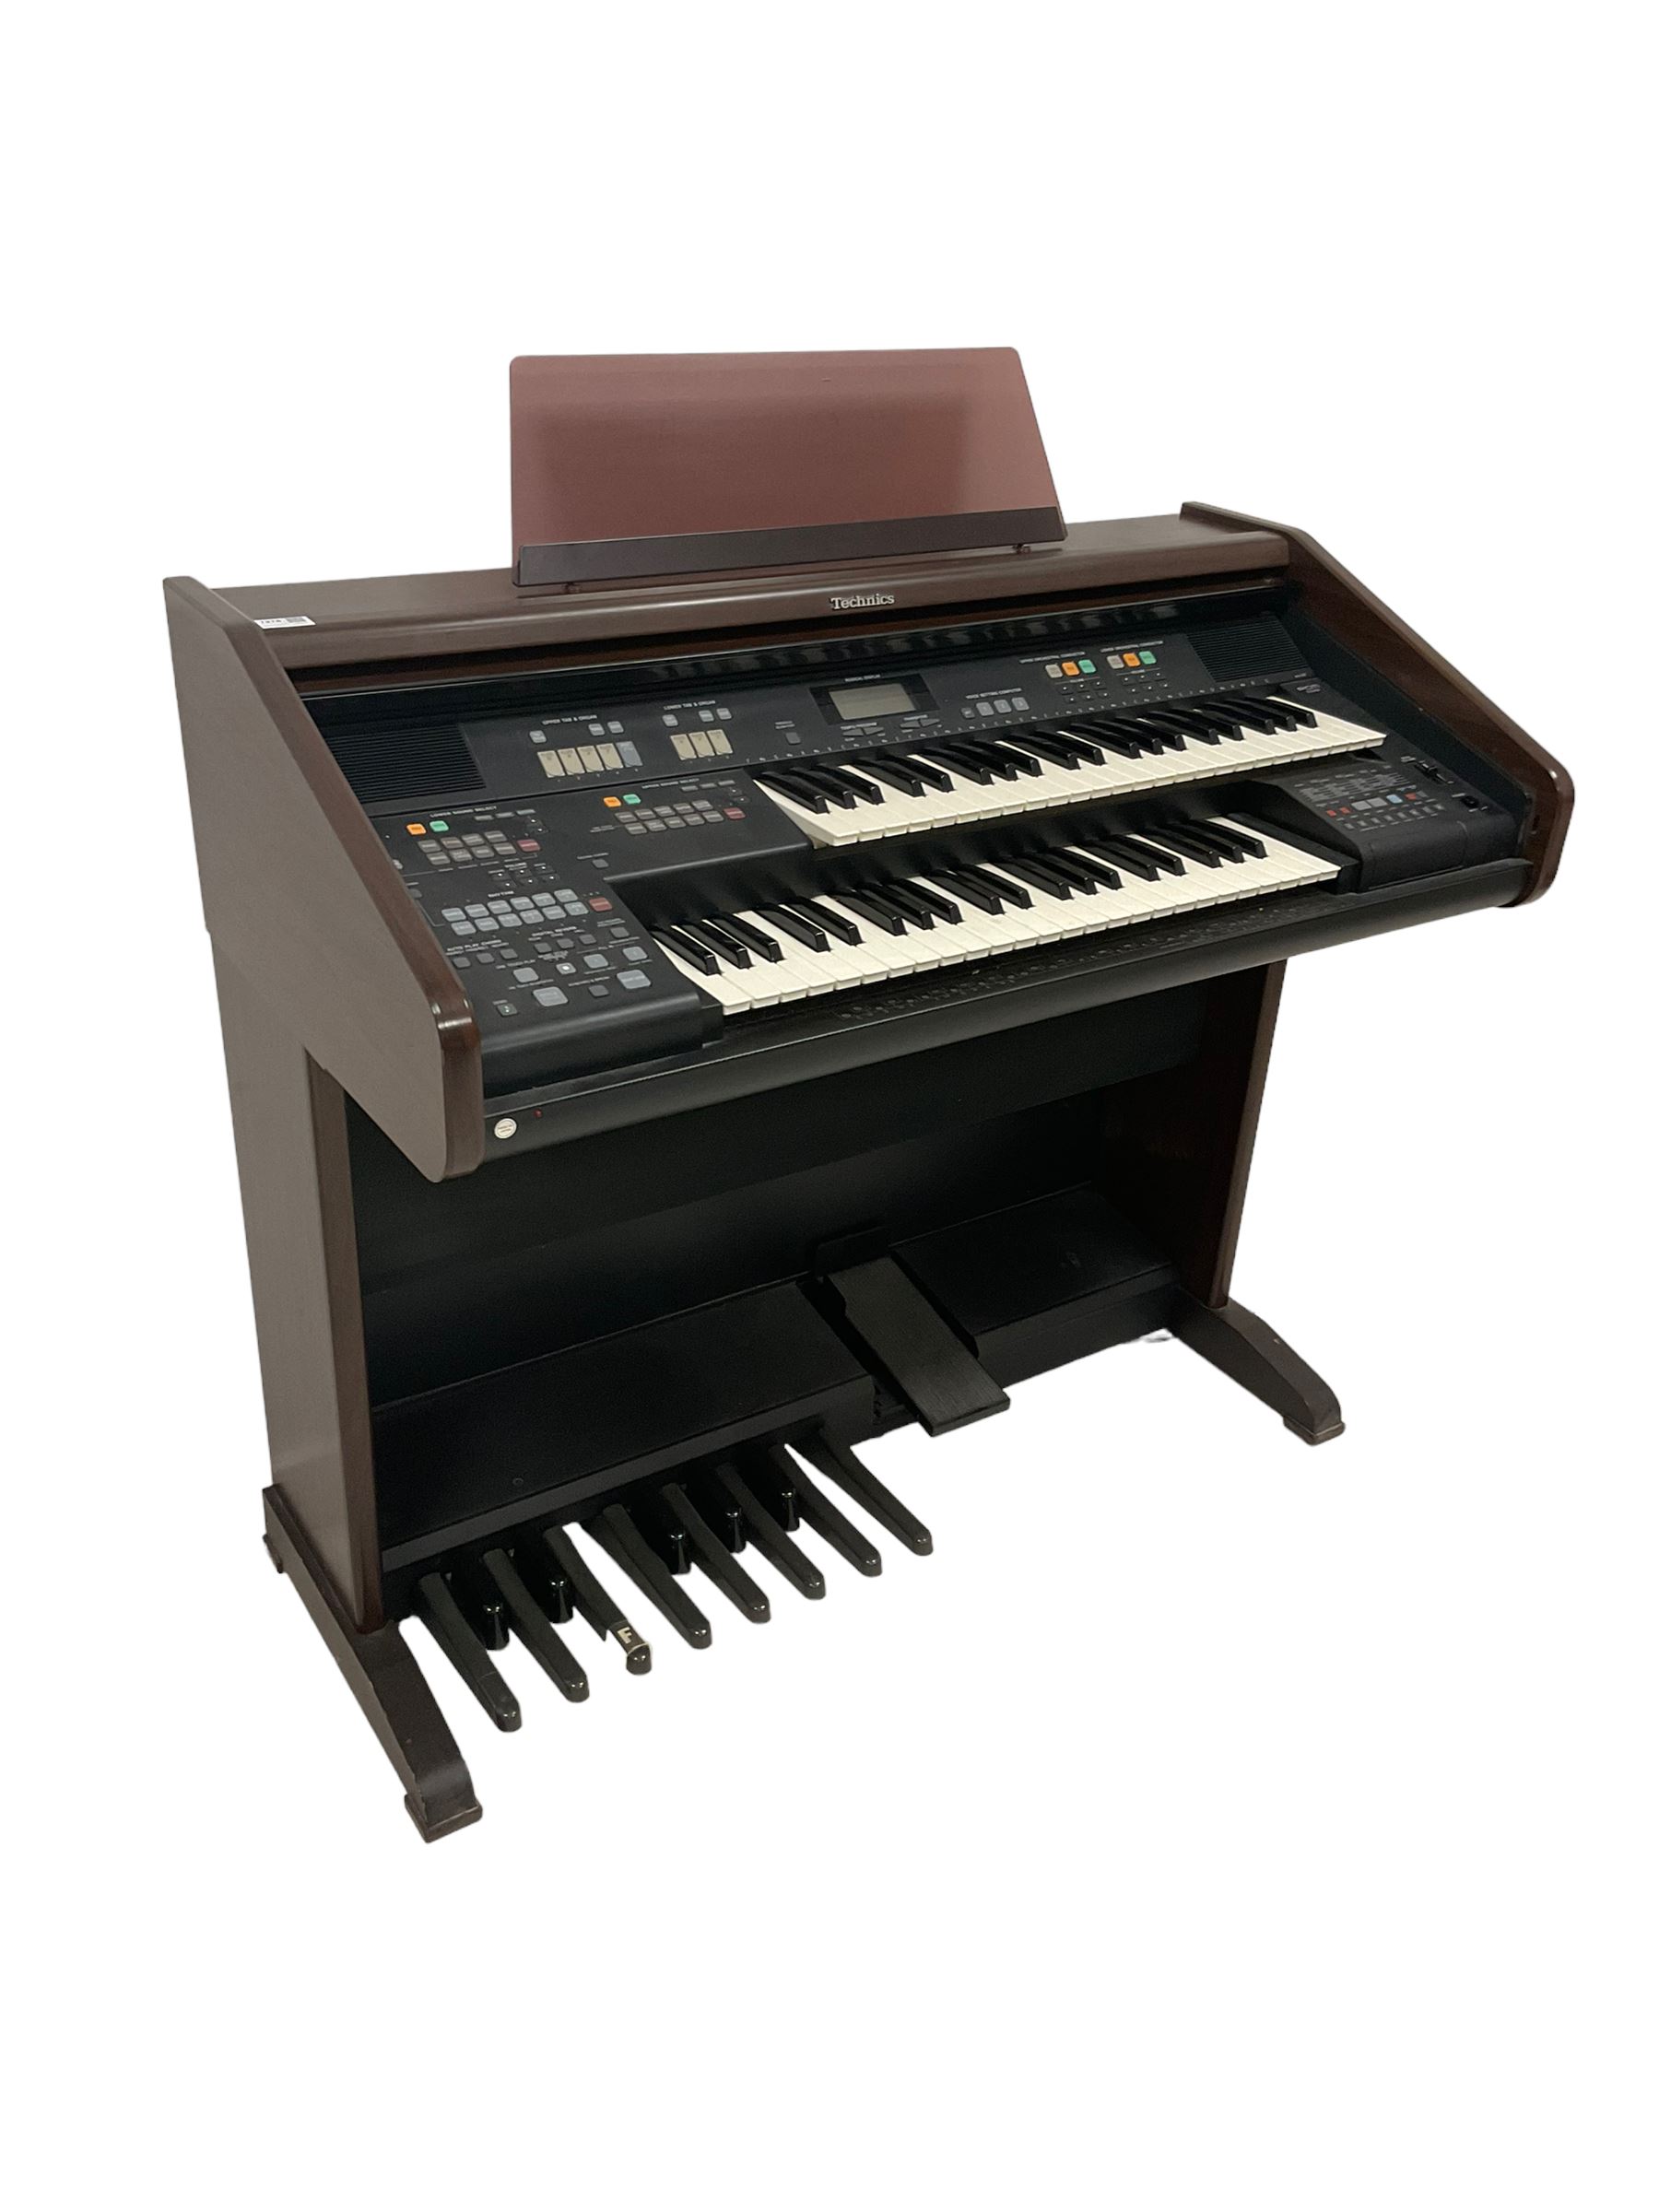 Technics - electric piano/organ - Image 3 of 5